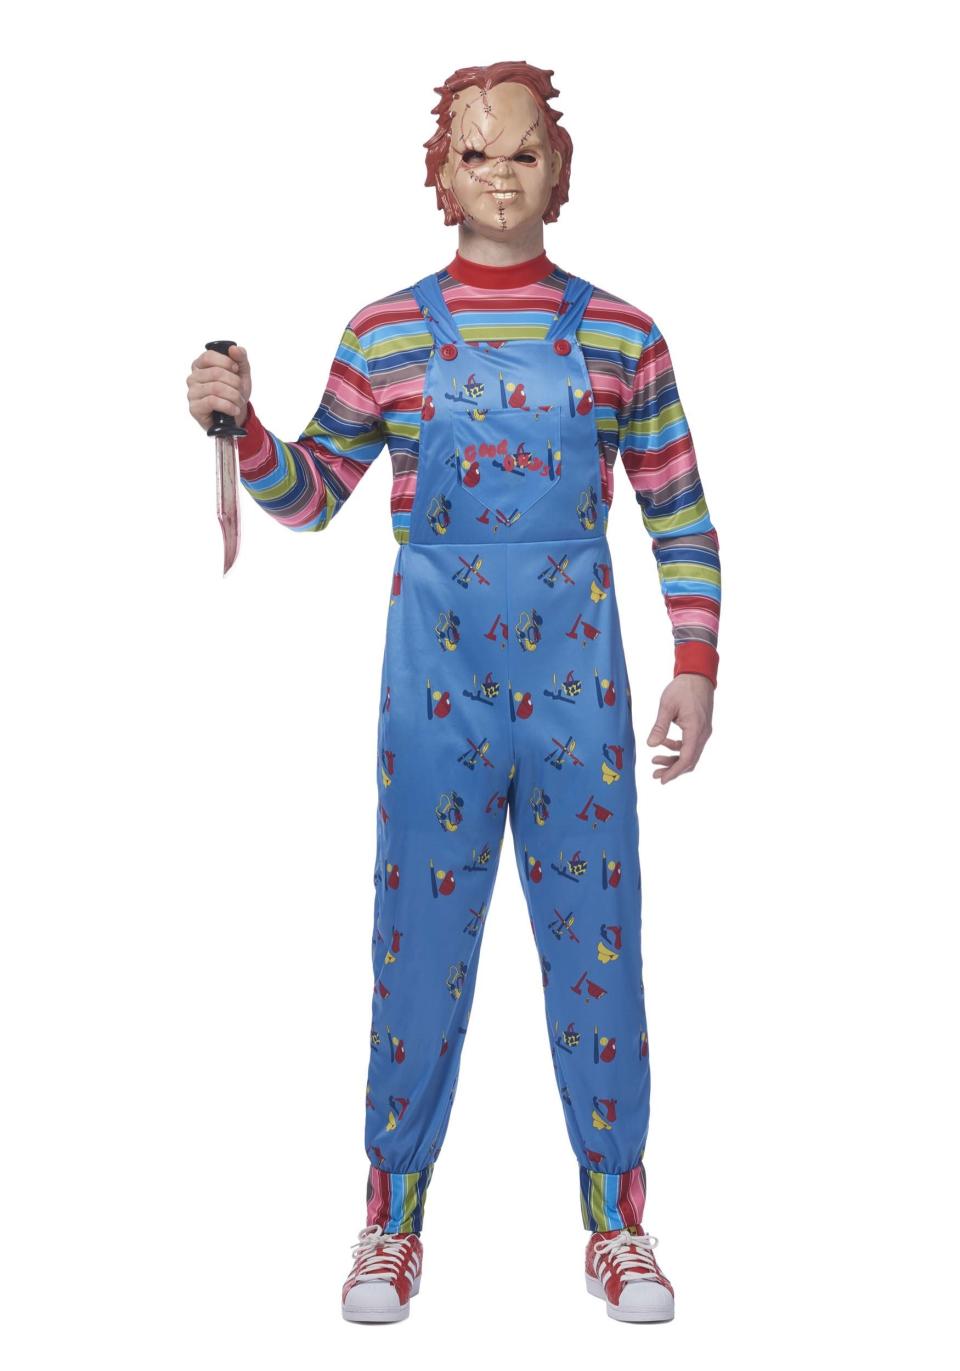 Mens Chucky Costume. Image via Walmart.